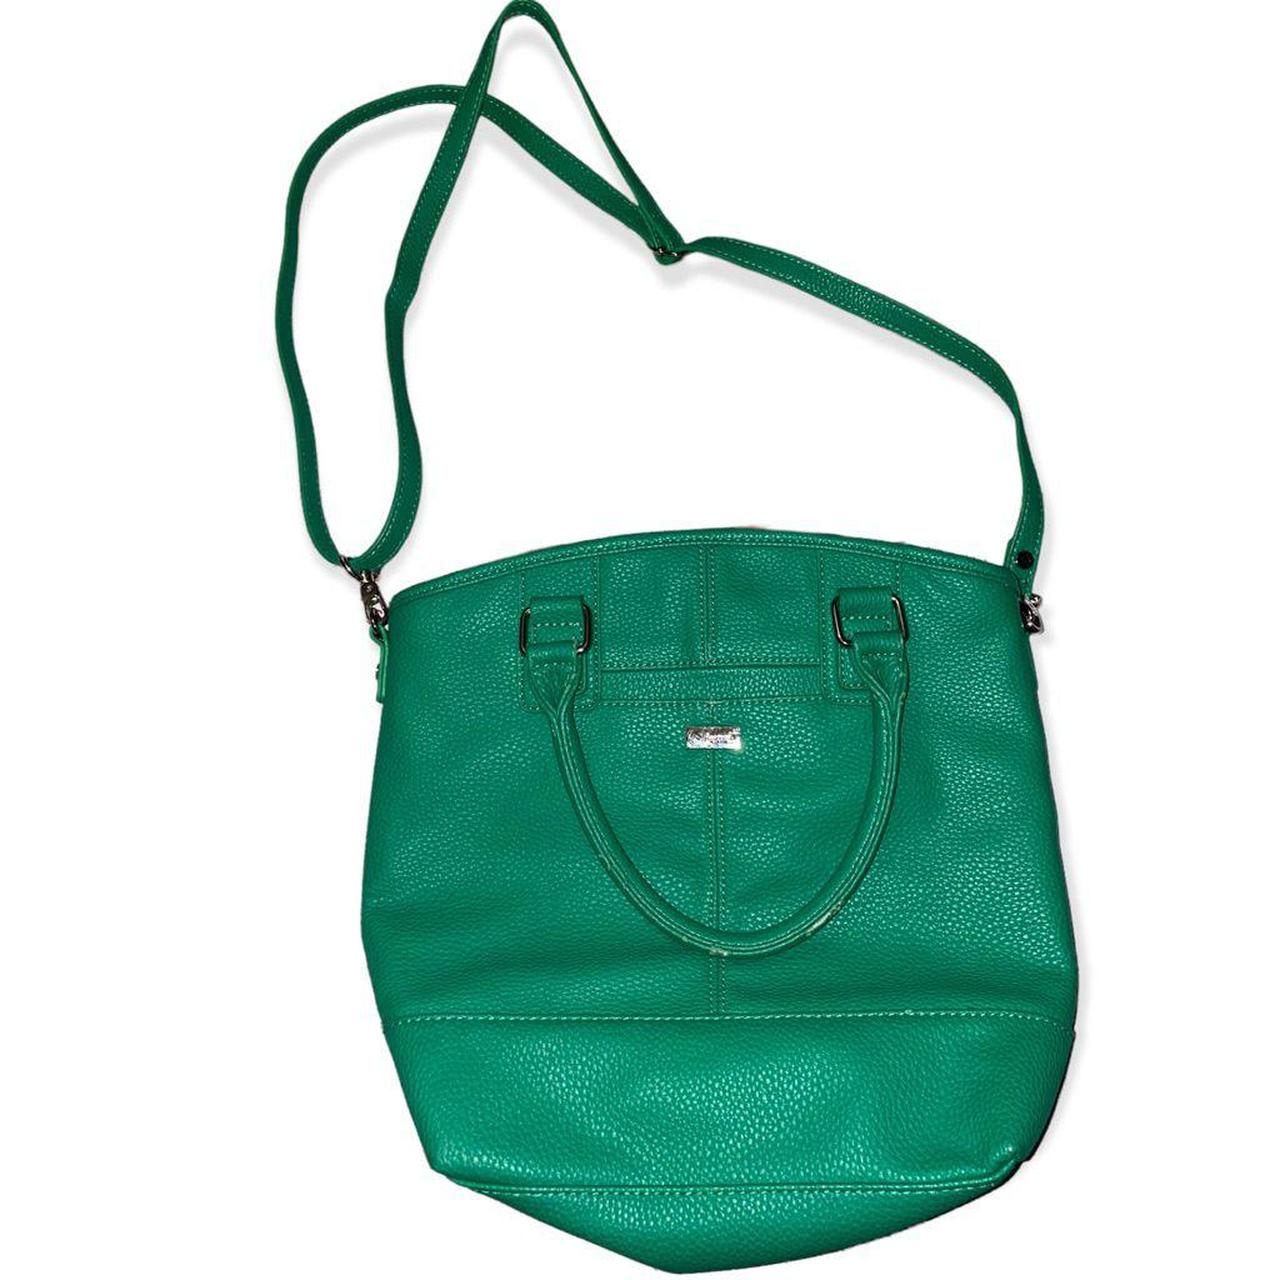 Amore Jewell Fashion Ladies' Bag-straw Tote Handbag in White/brown/dark  Brown/handmade Bag/straw Bag/beach Bag/tote Bag/handbag/clutch - Etsy